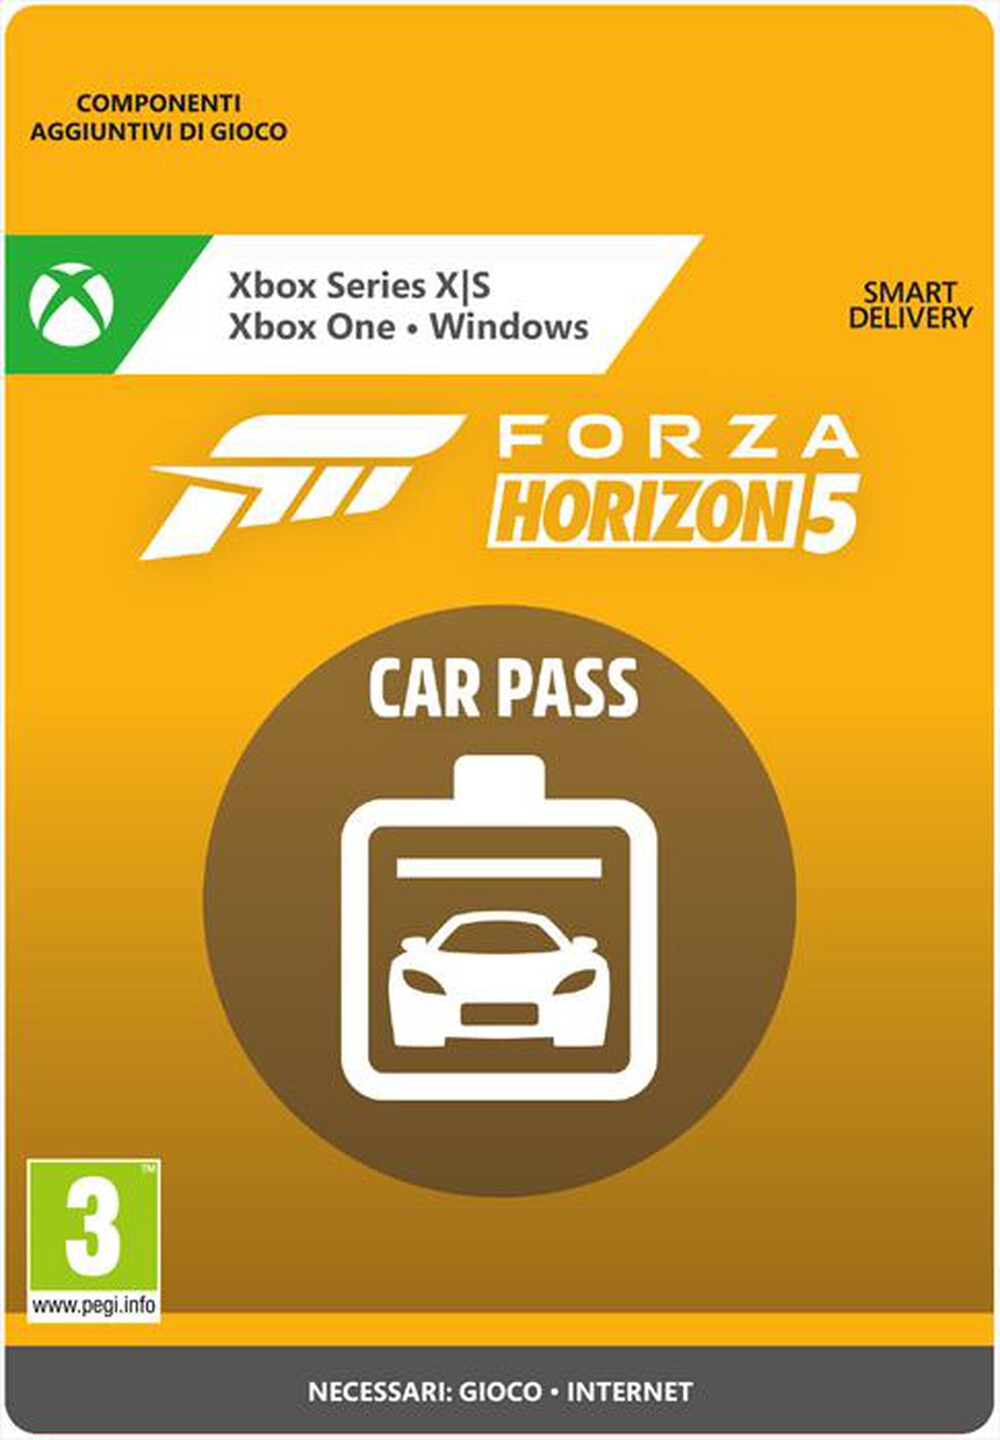 "MICROSOFT - Forza Horizon 5 Car Pass"